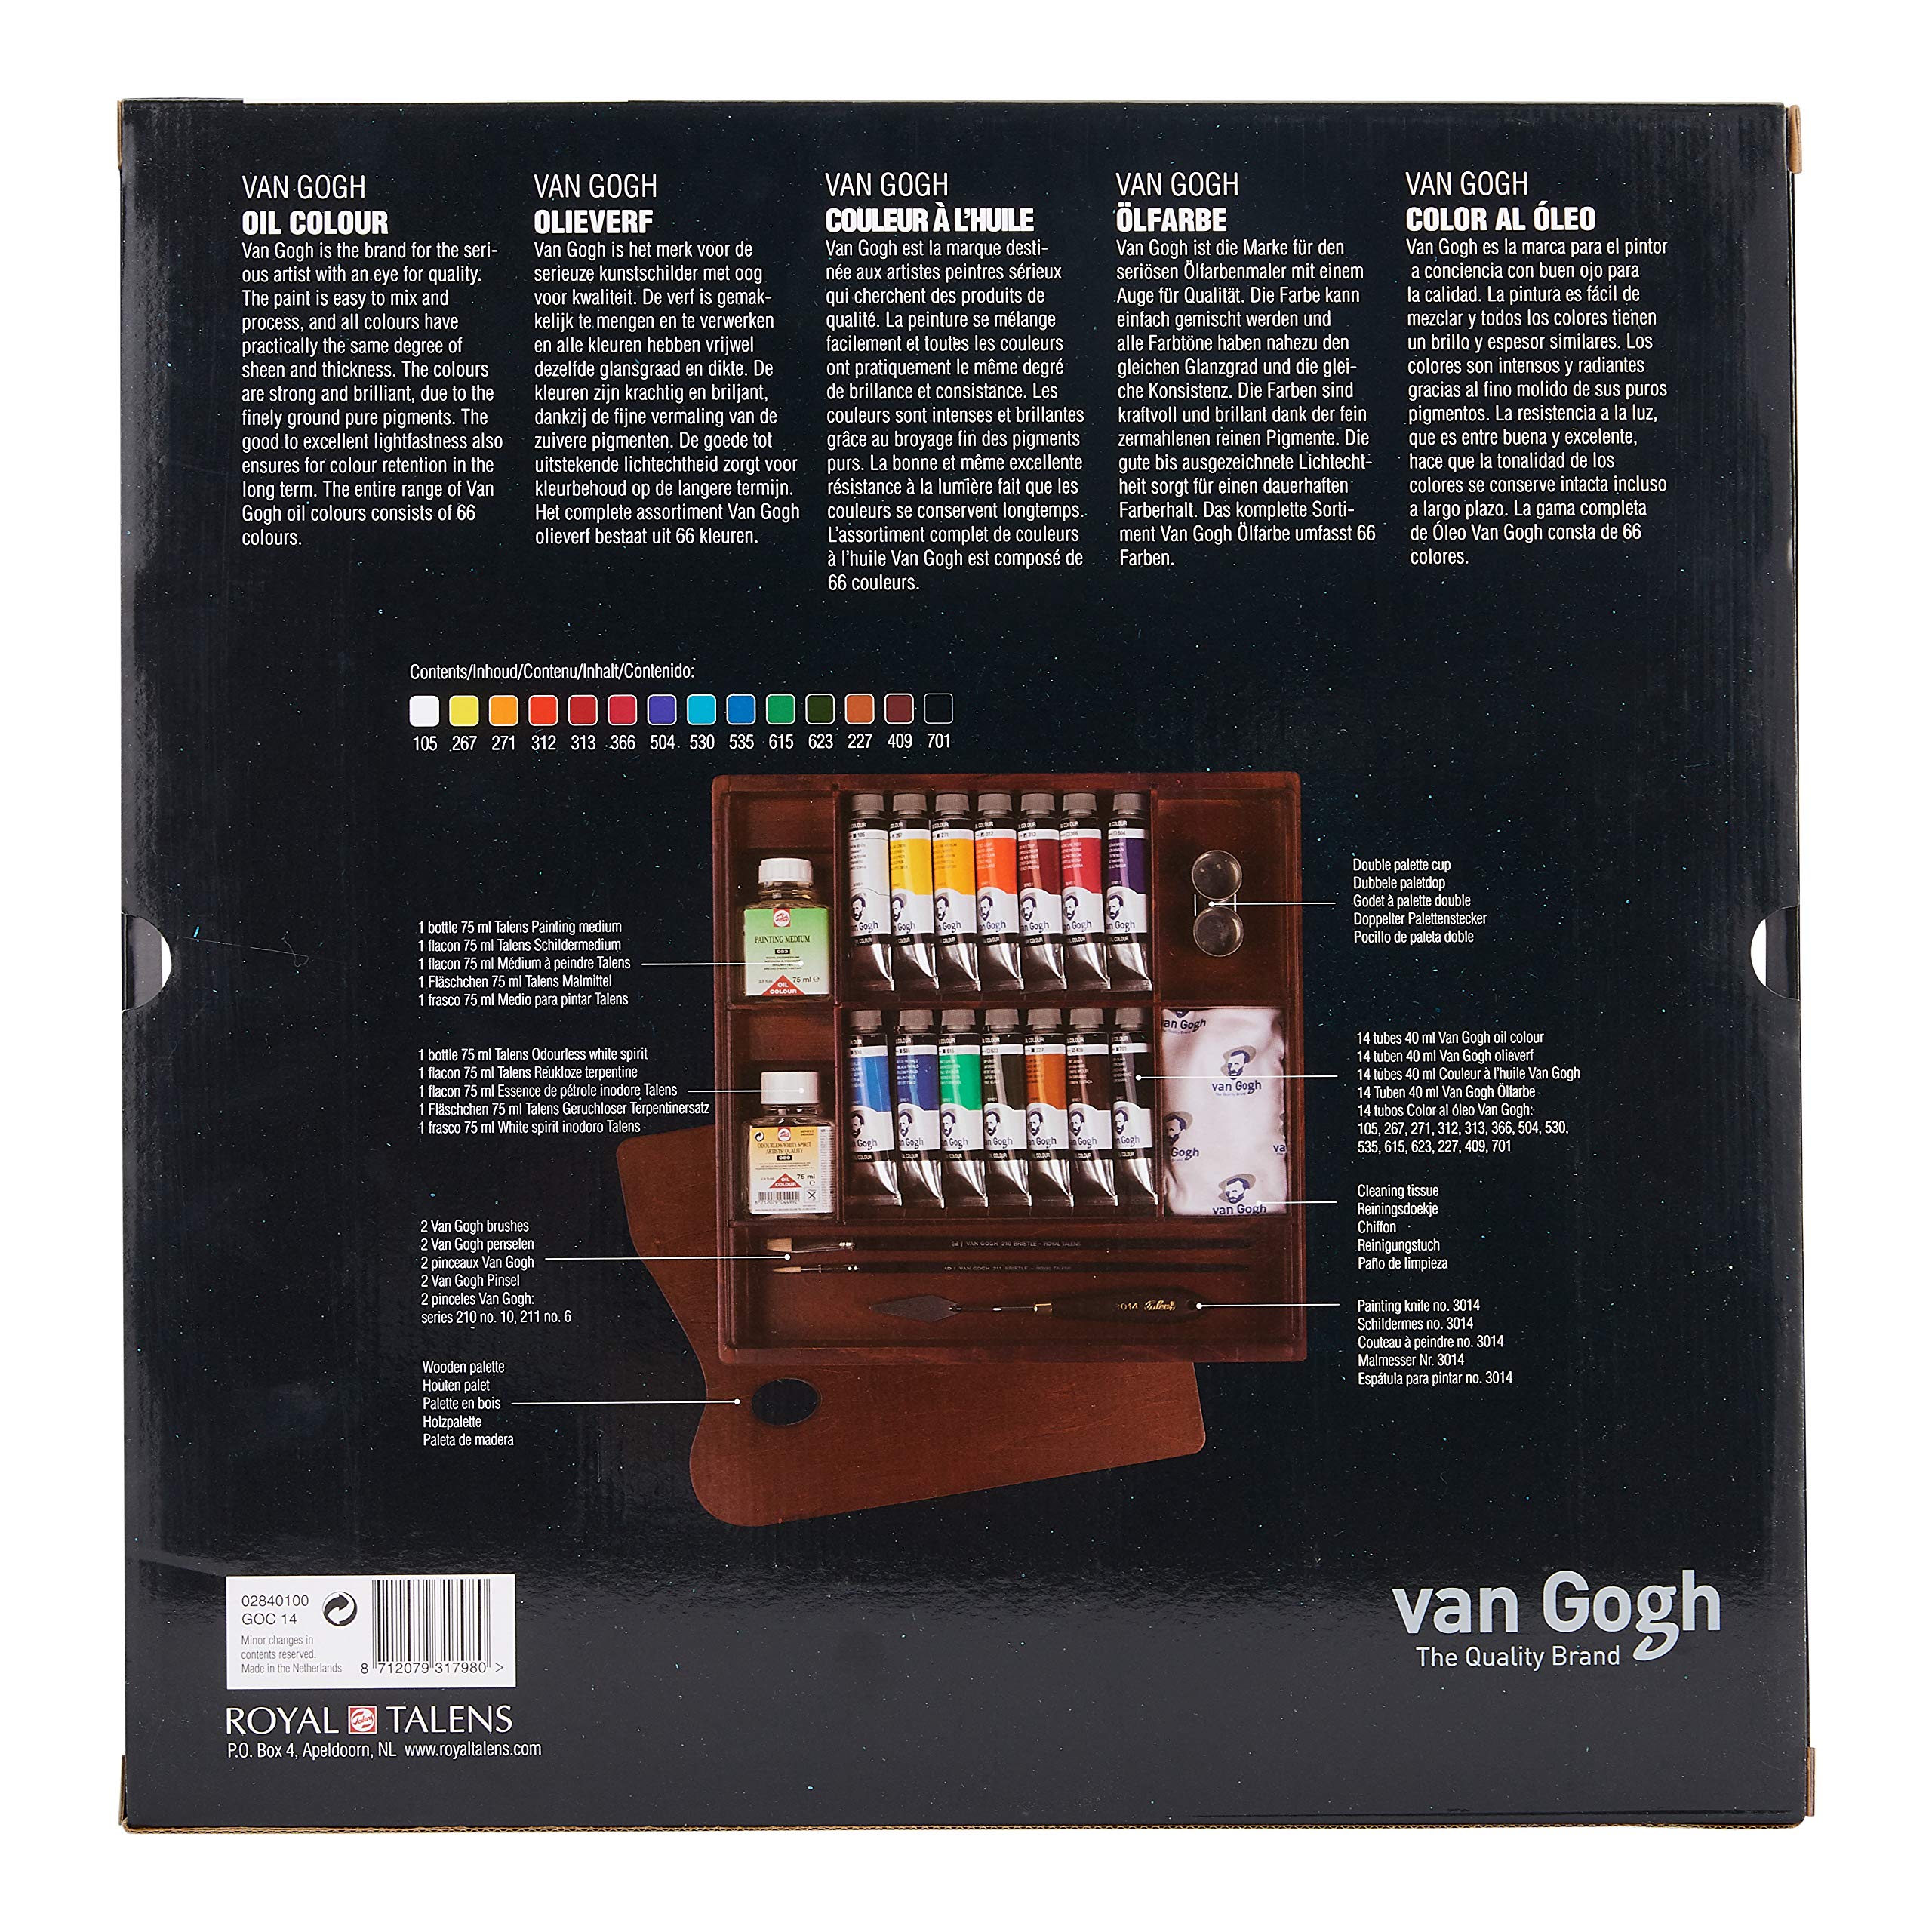 Van Gogh Oil Color Paint, 14x40ml Tubes + Accessories, Wooden Box Inspiration Set